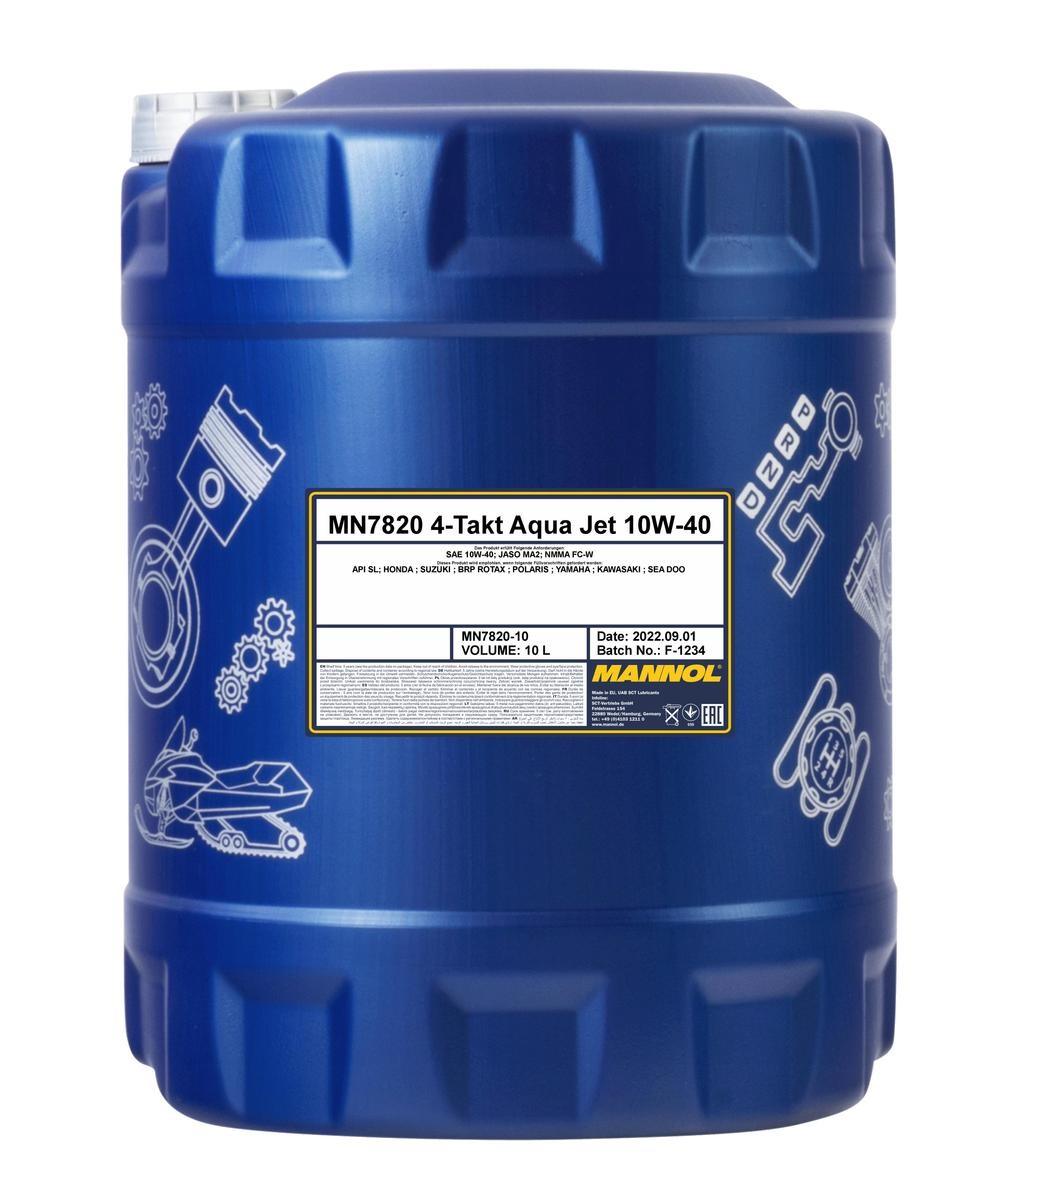 MANNOL AQUA JET, 4-Takt 10W-40, 10l, Part Synthetic Oil Motor oil MN7820-10 buy